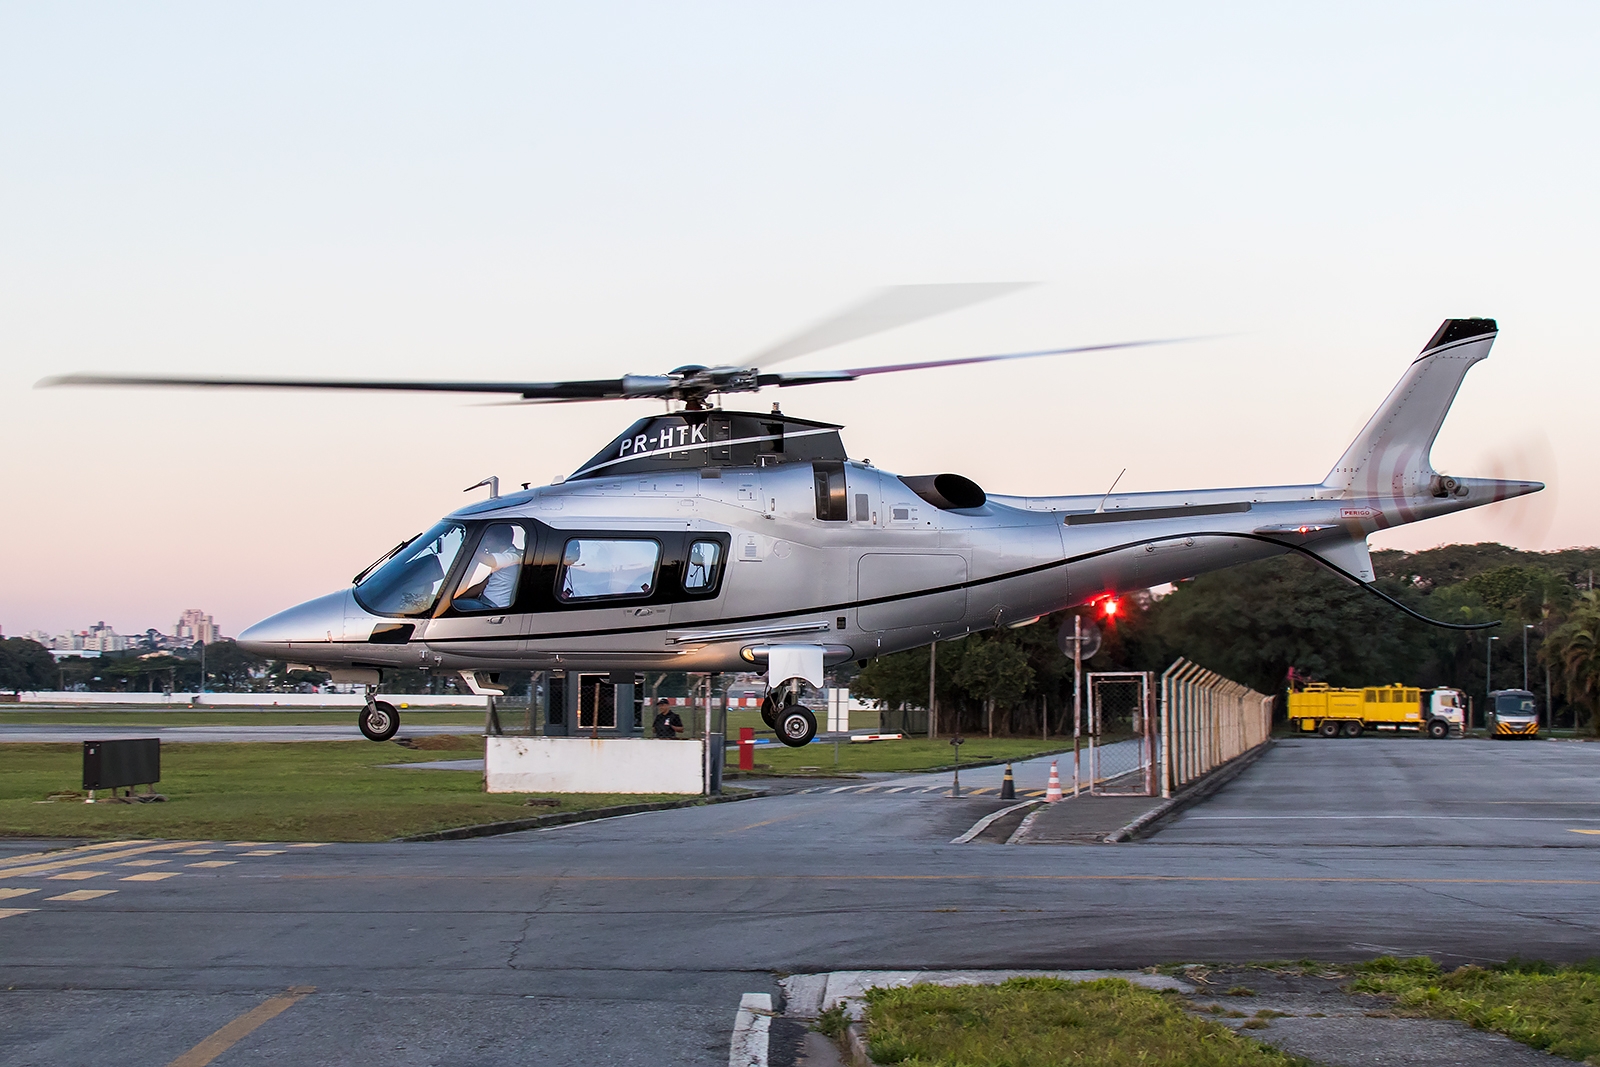 PR-HTK - Agusta A109 Power